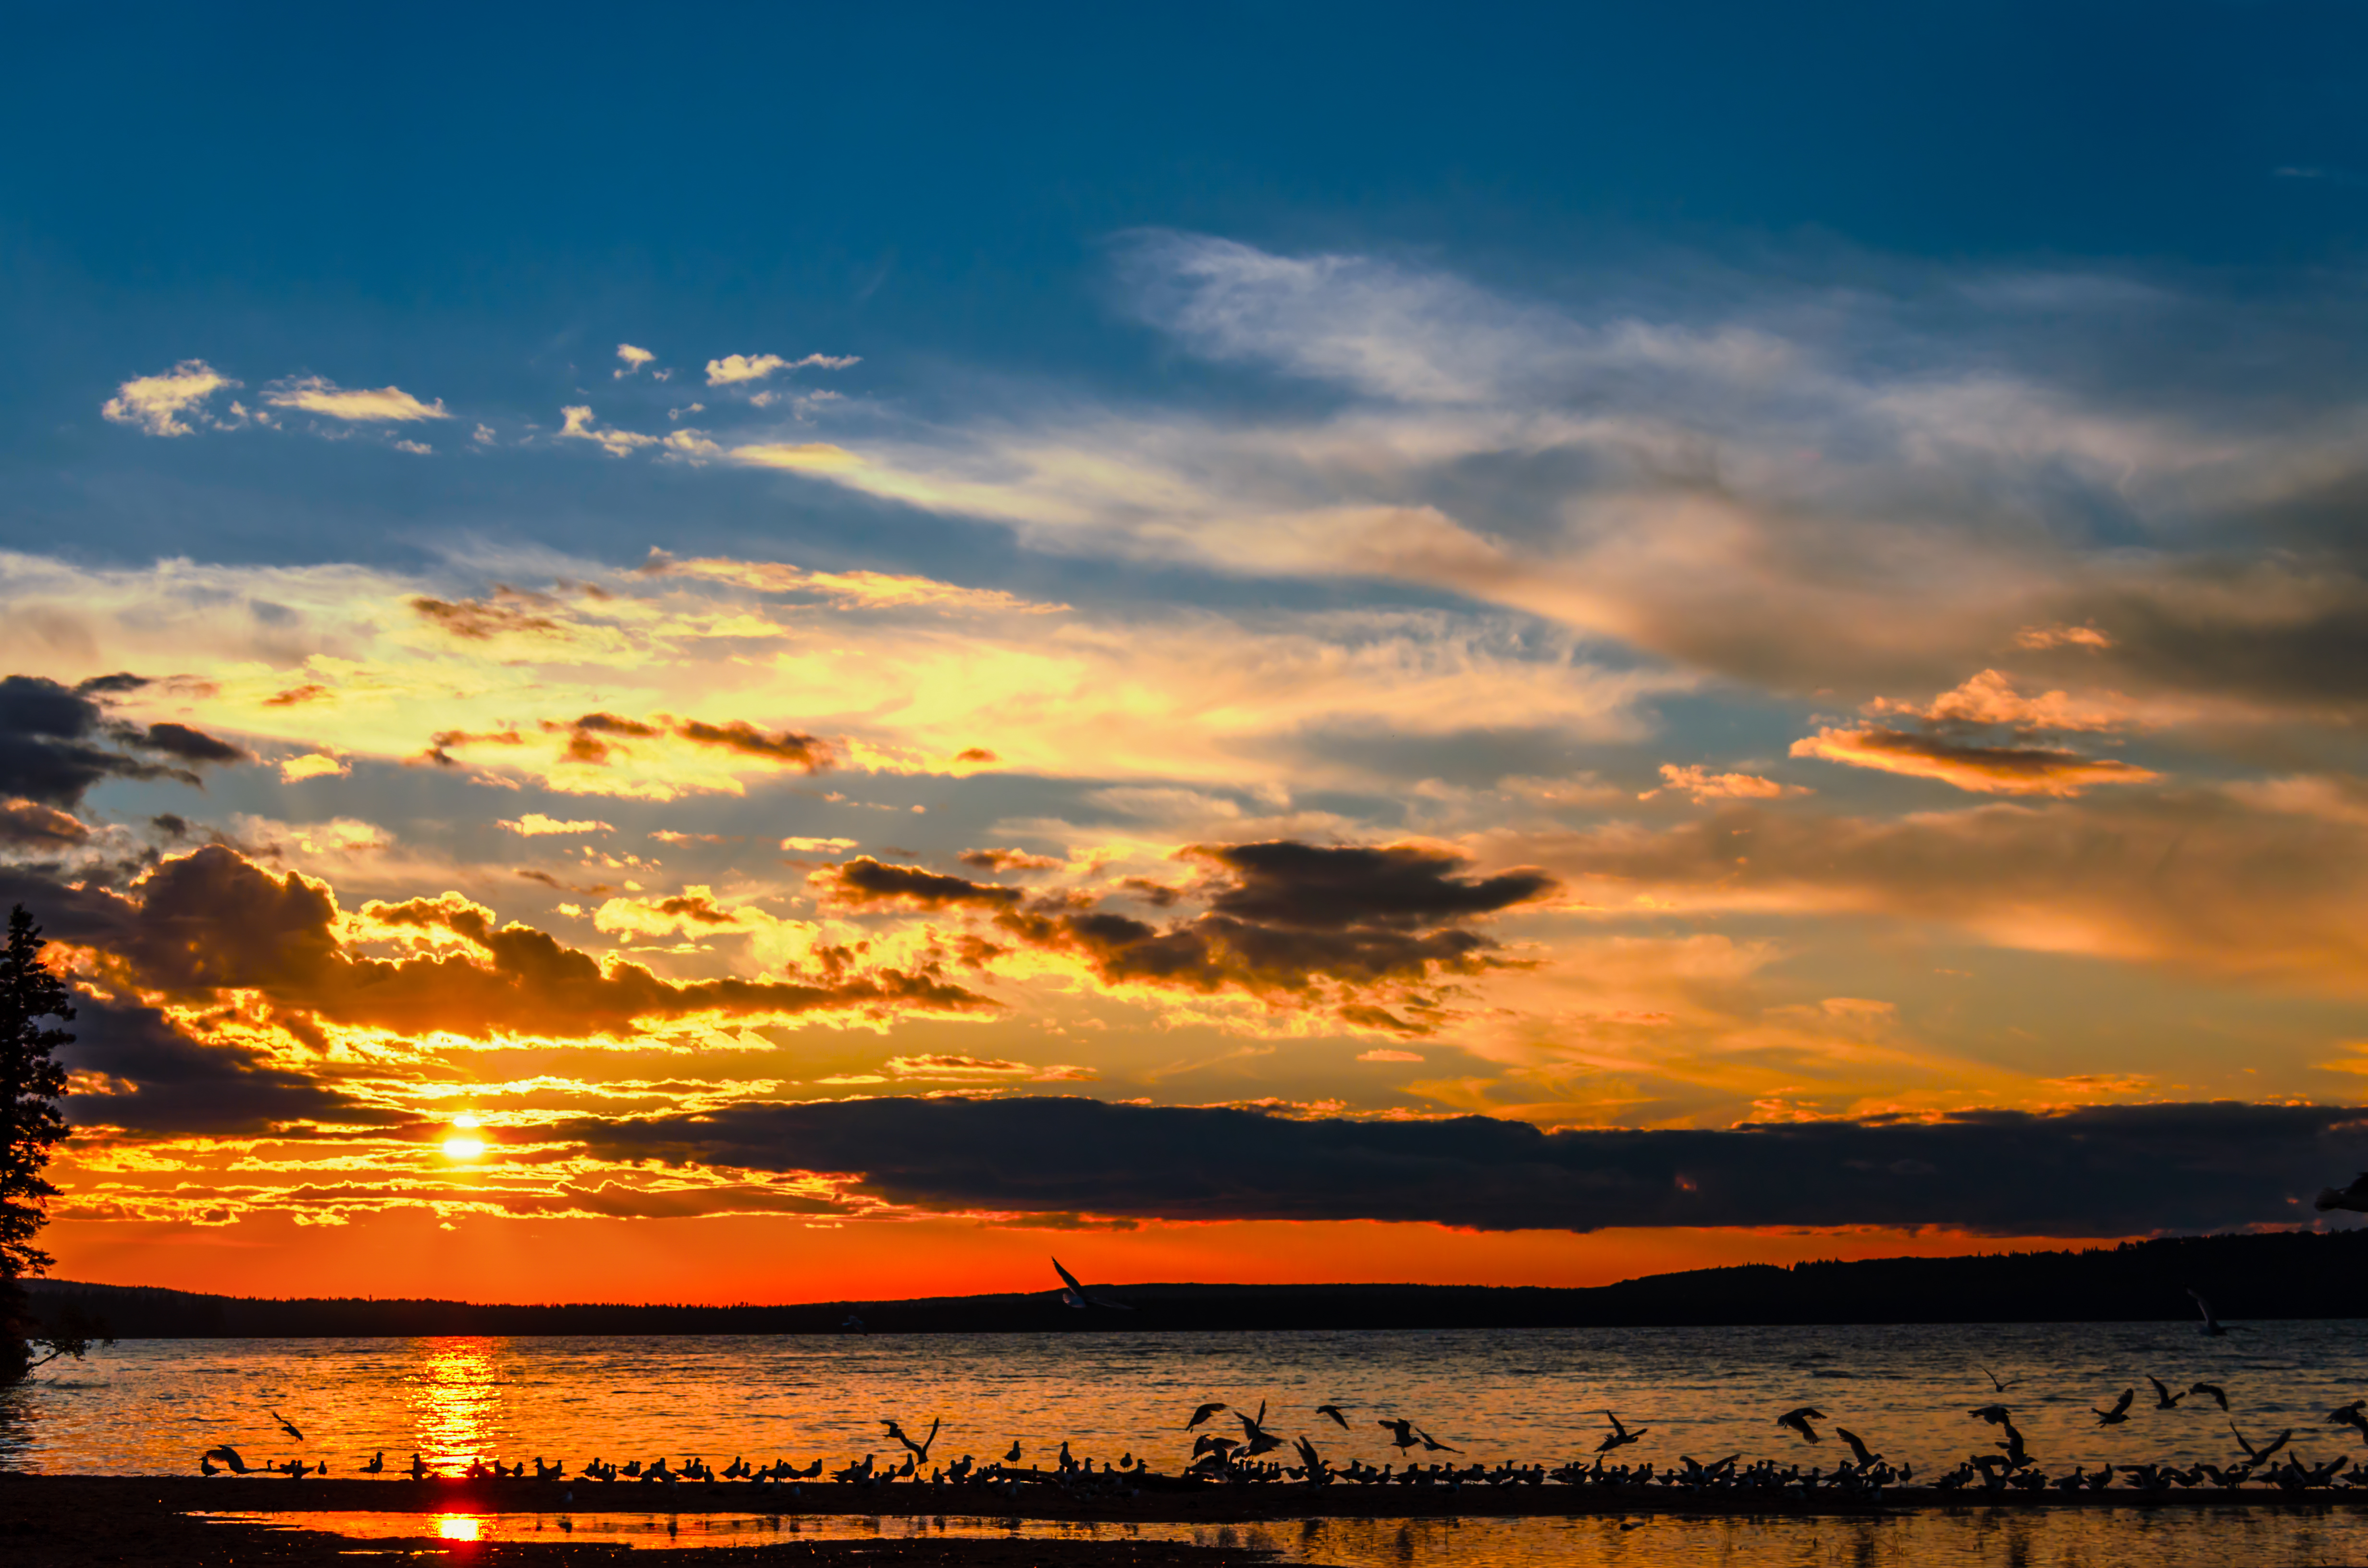 Seagulls on sunset flying over the Waskesiu Lake in Prince Albert National Park Saskatchewan, Canada